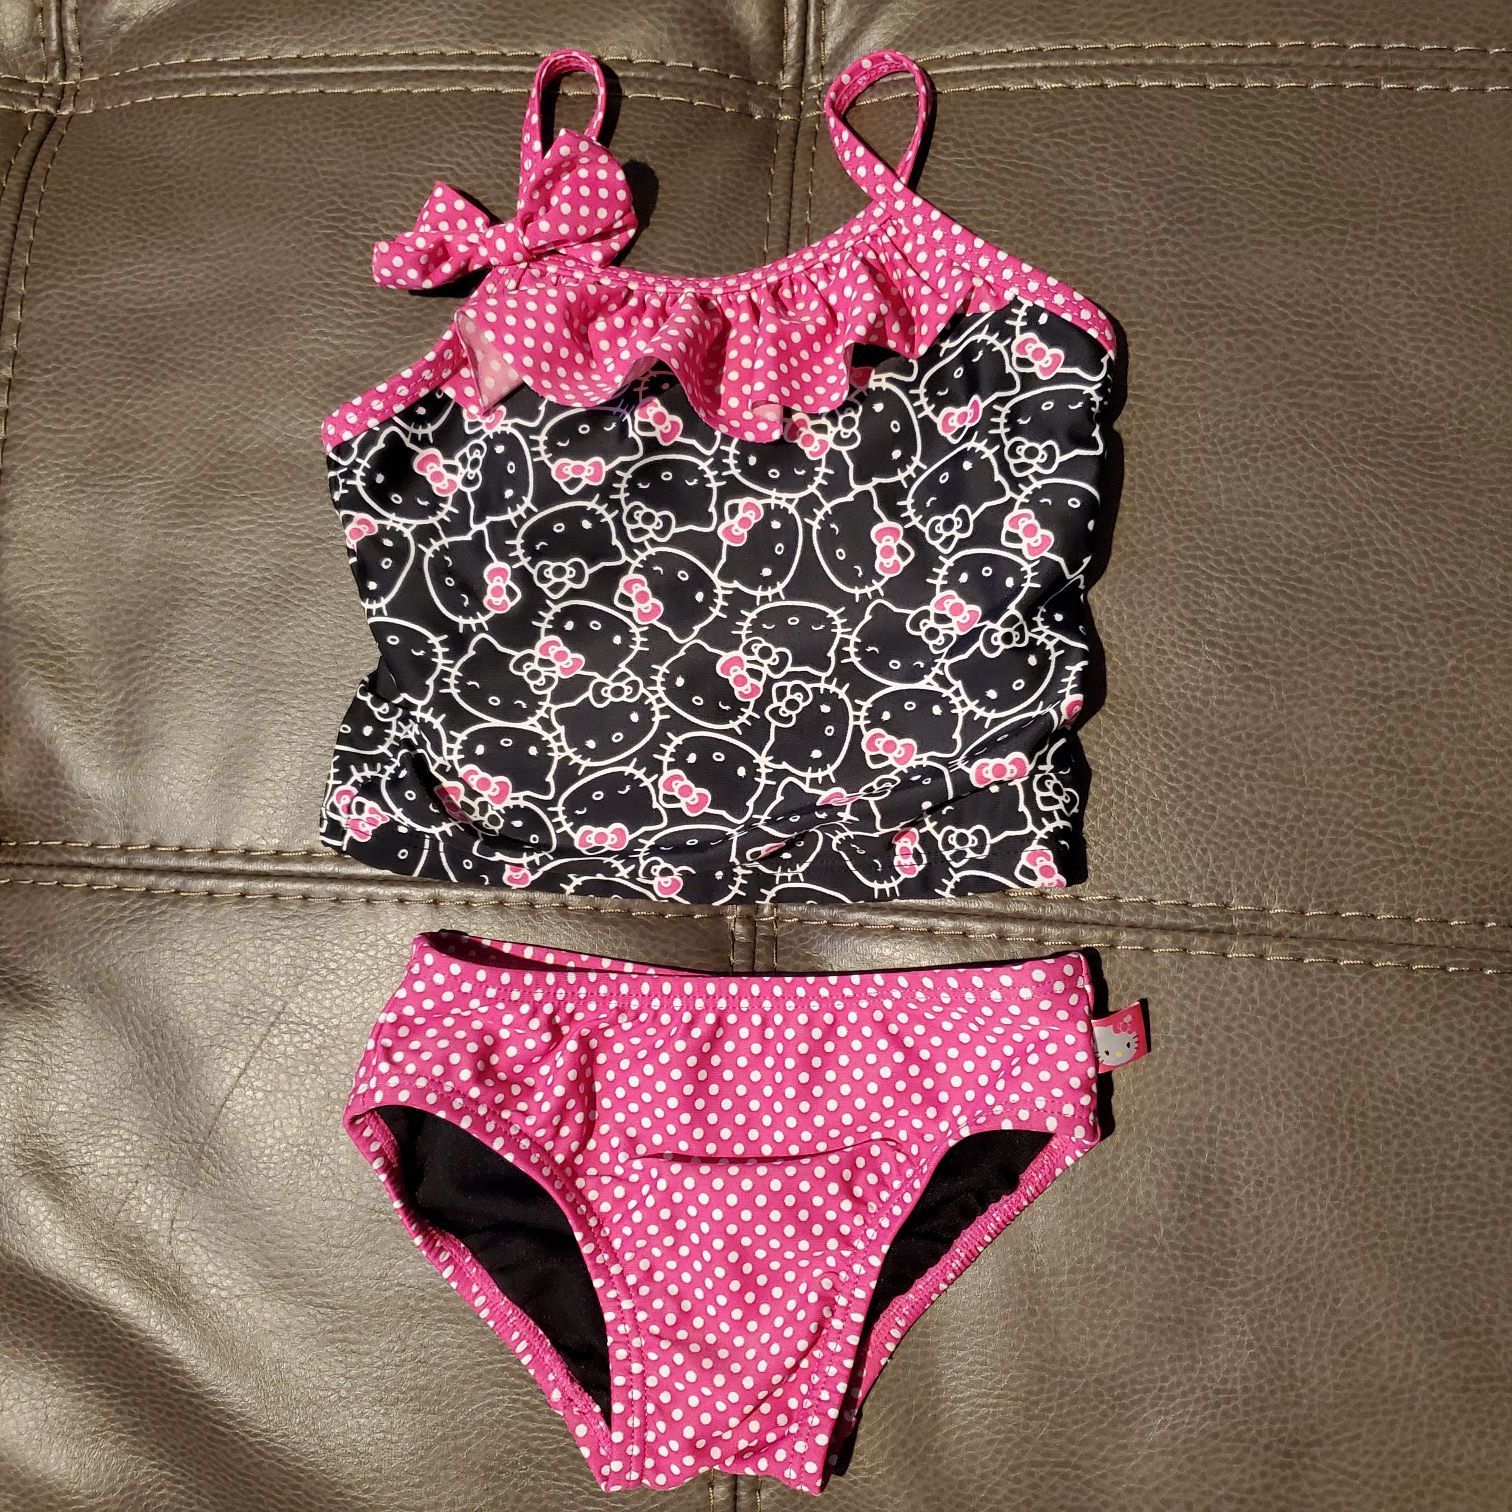 3T 2 piece Hello Kitty bathing suit